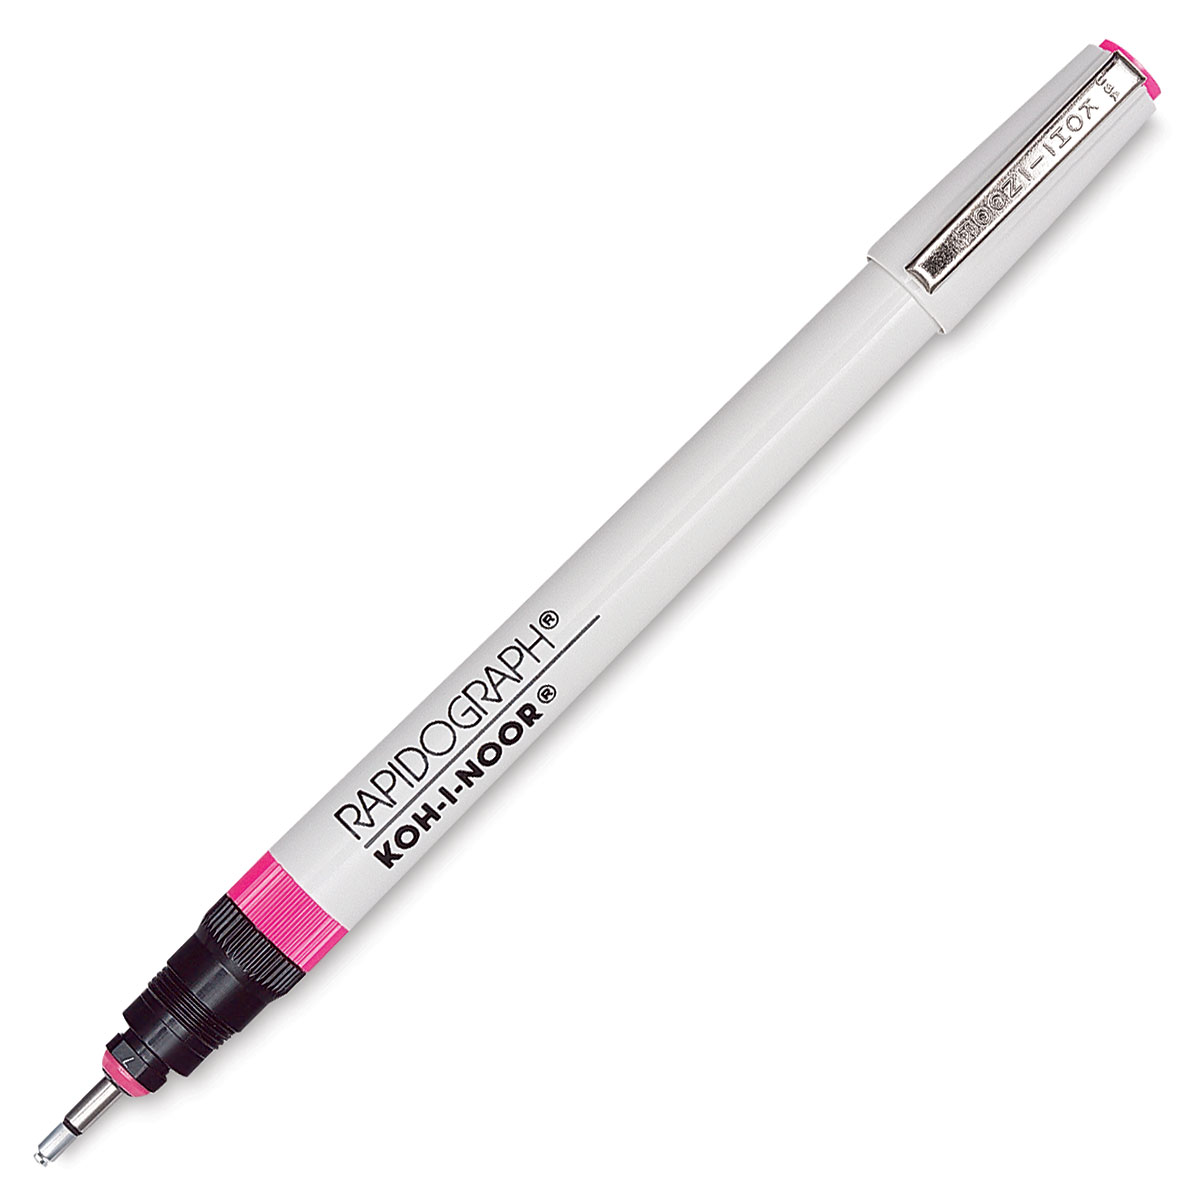 Koh-I-Noor Rapidograph Slim Pen and Ink Set, 7 Assorted Pen Nibs and .75 oz